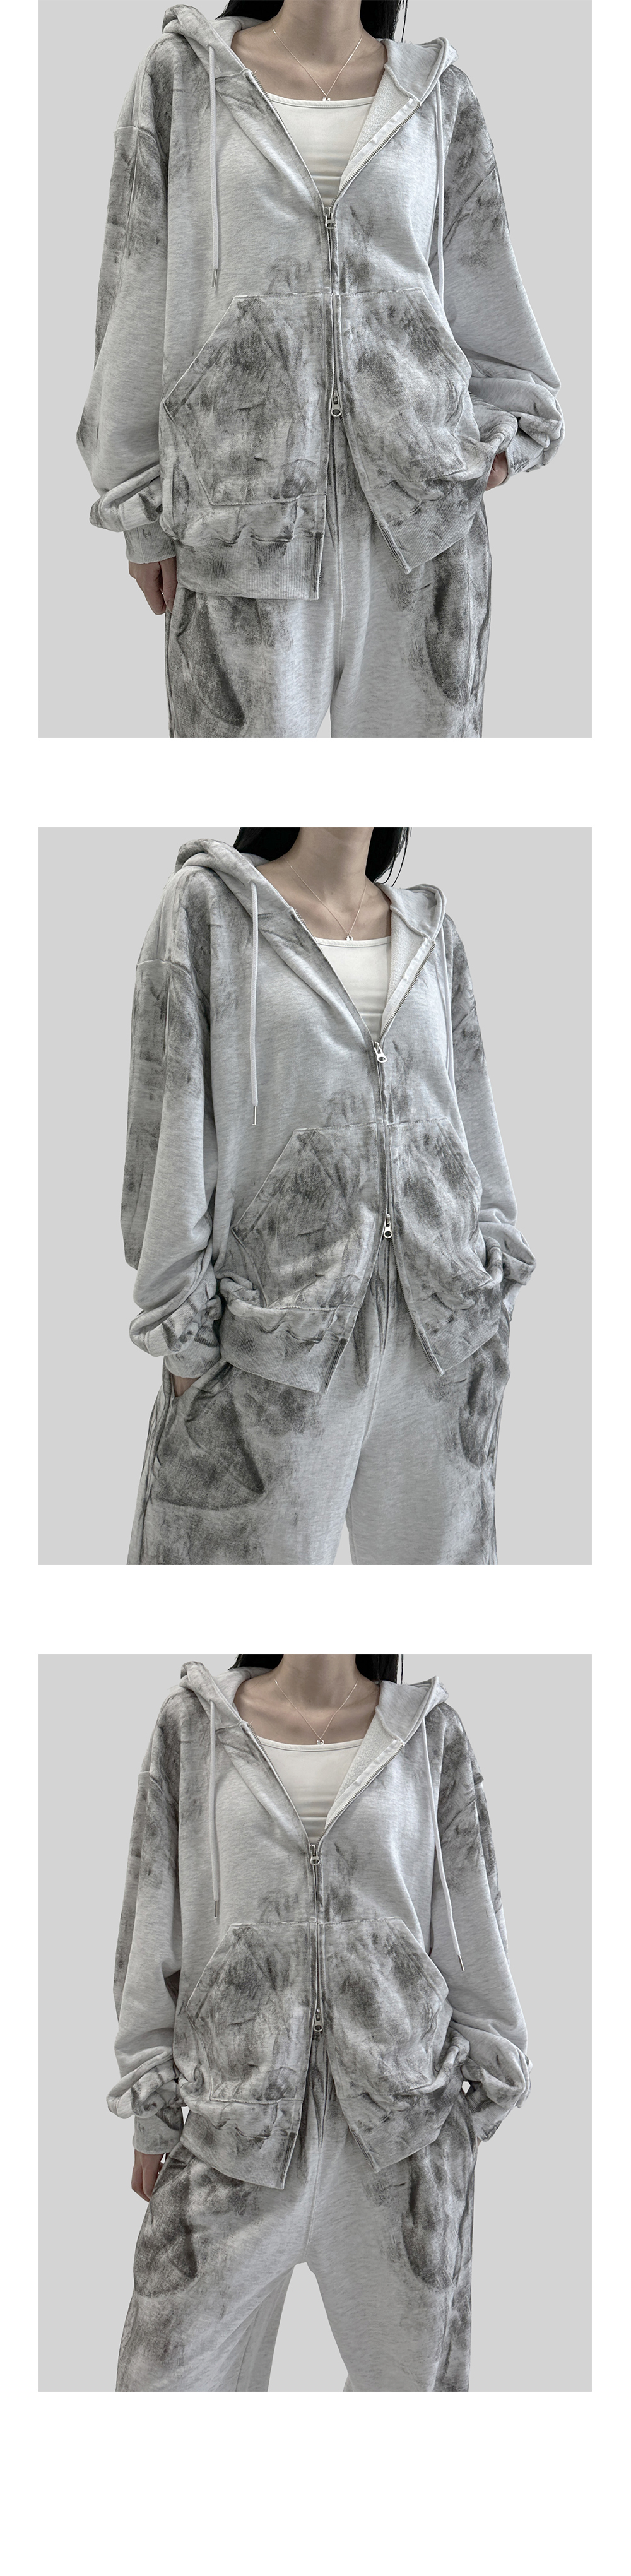 dress grey color image-S2L2